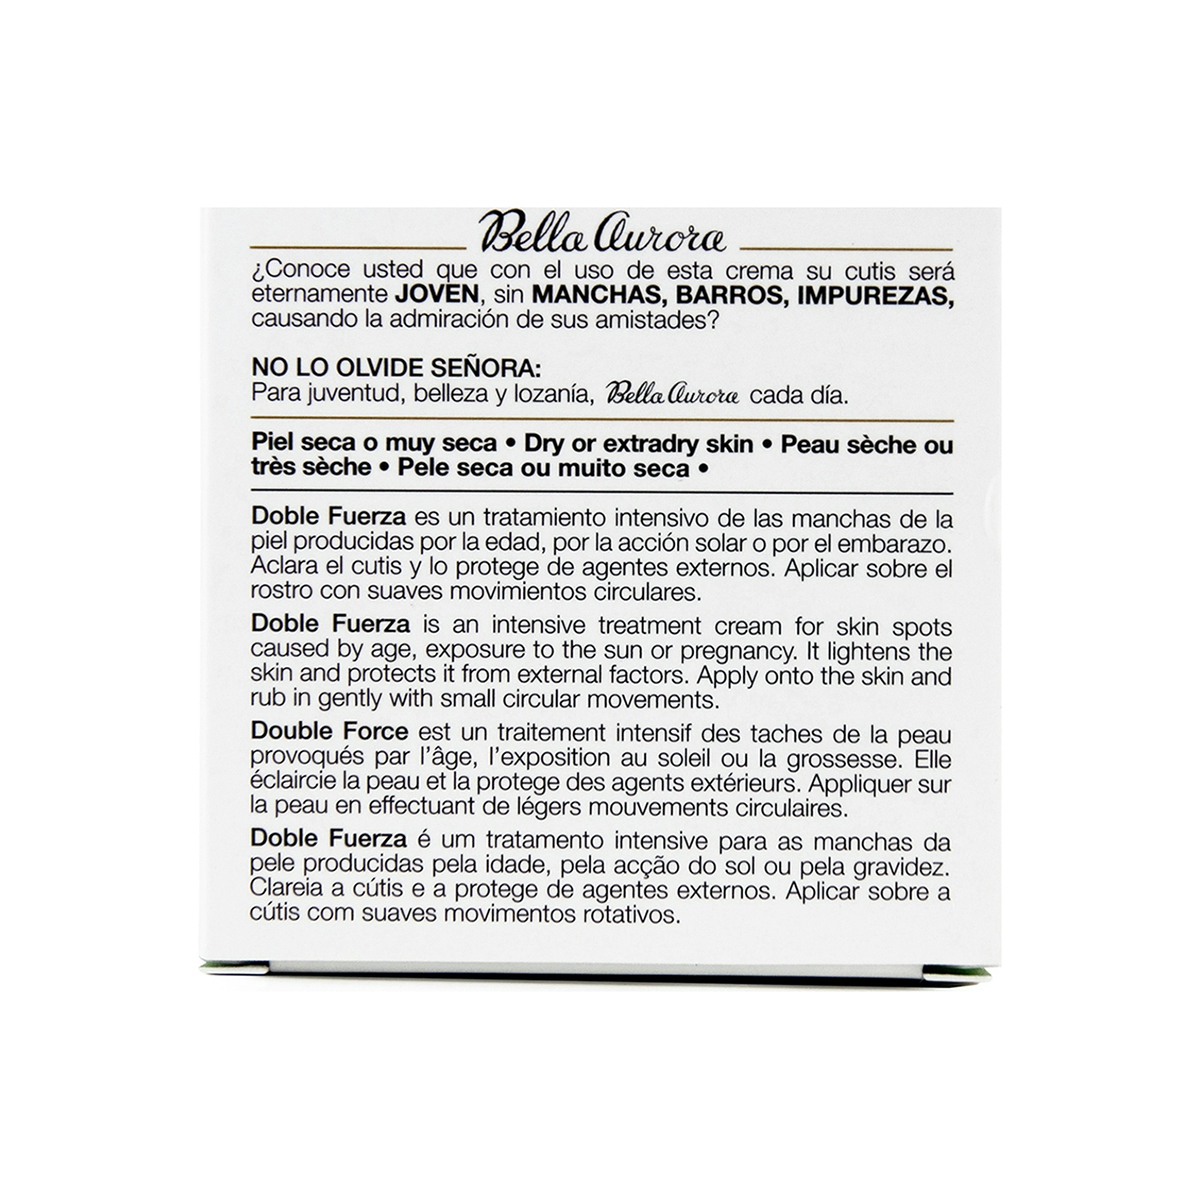 Crema anti-manchas Doble Fuerza BELLA AURORA piel seca 30 ml